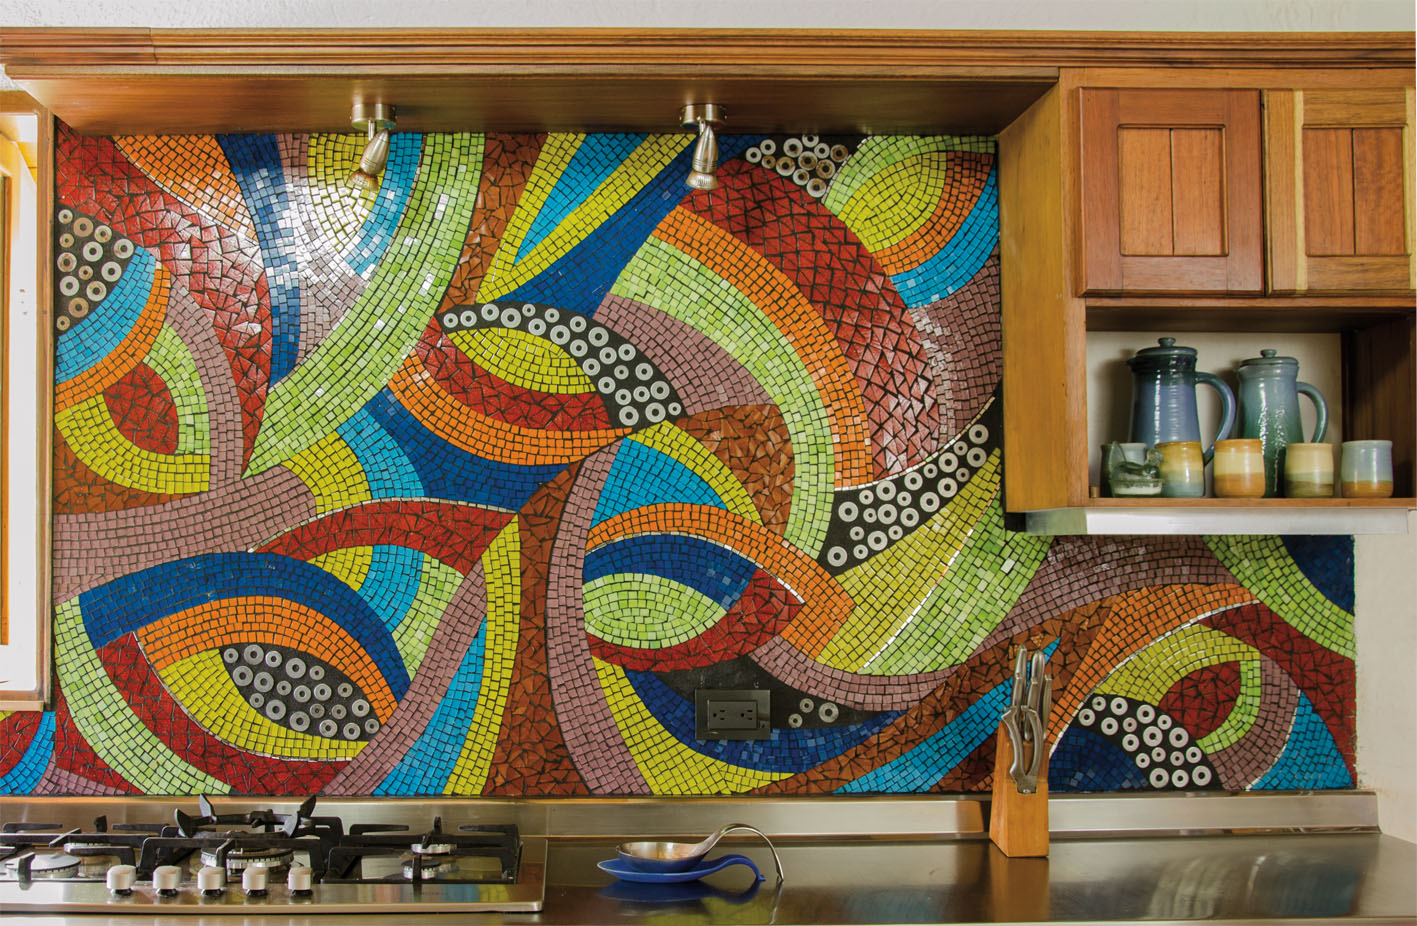 Grande backsplash mosaico in colori molto vivaci